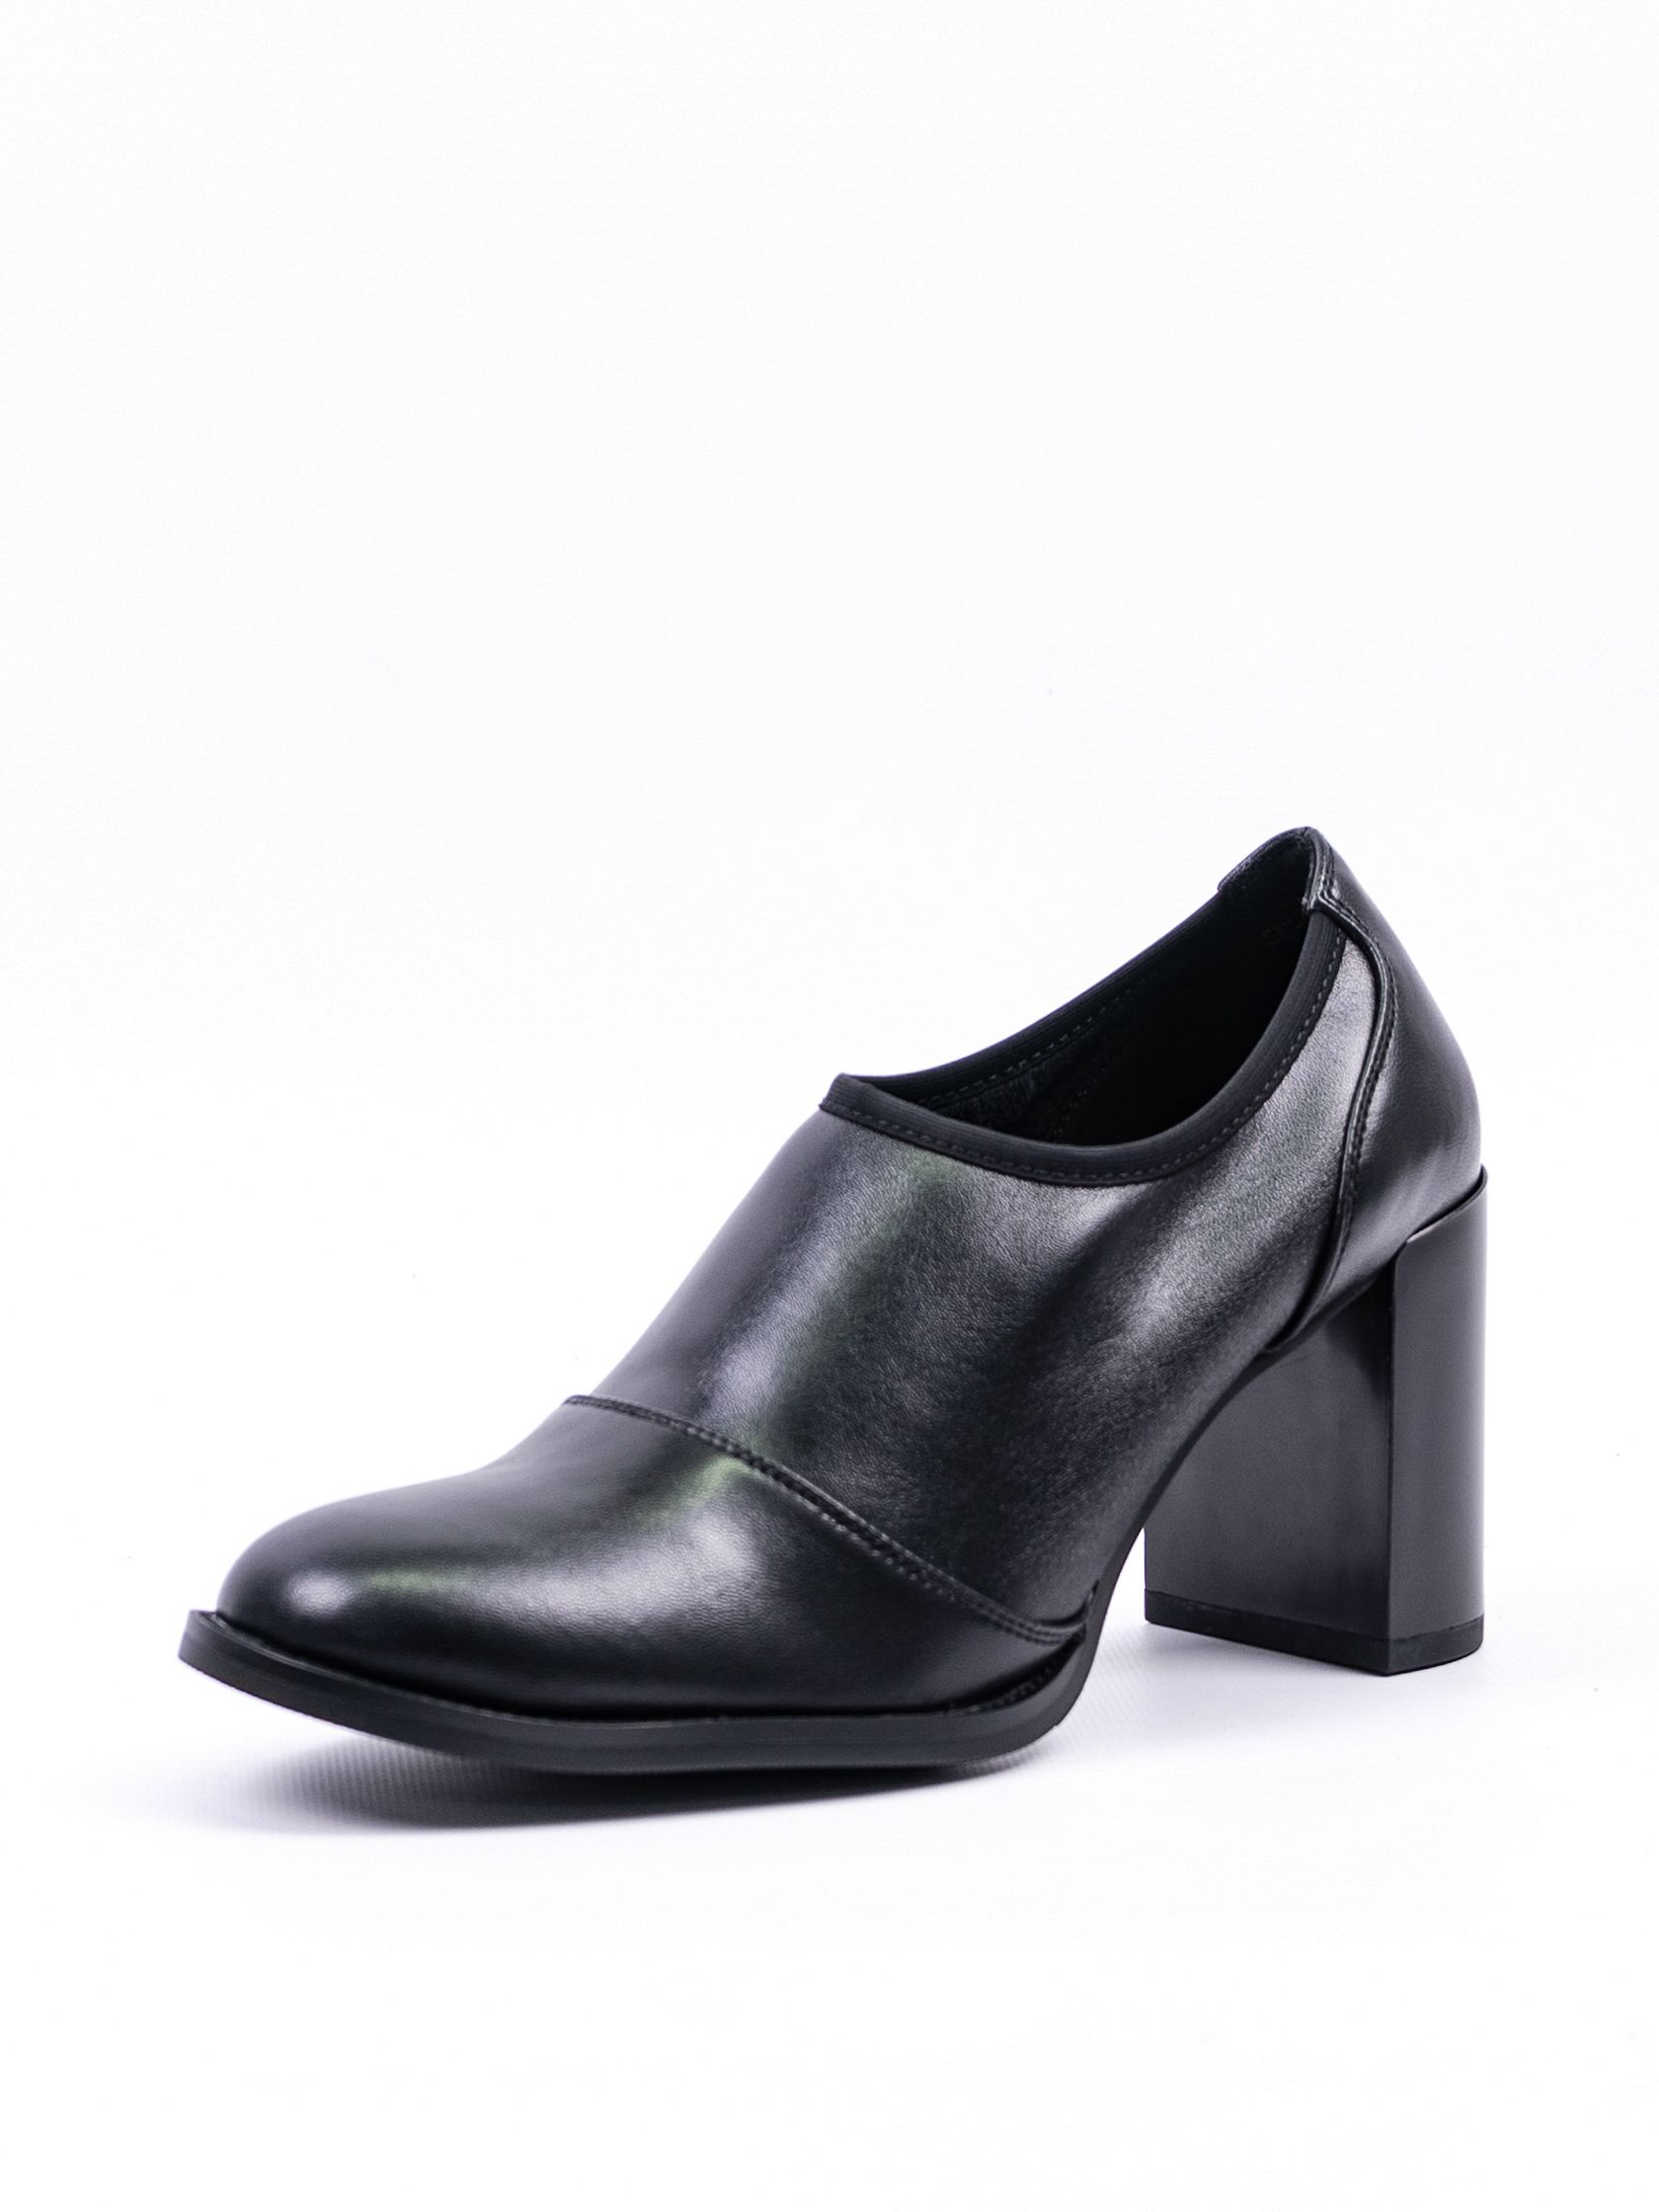 Туфли женские MADELLA SMX-MXW09-0301-ST черные 39 RU